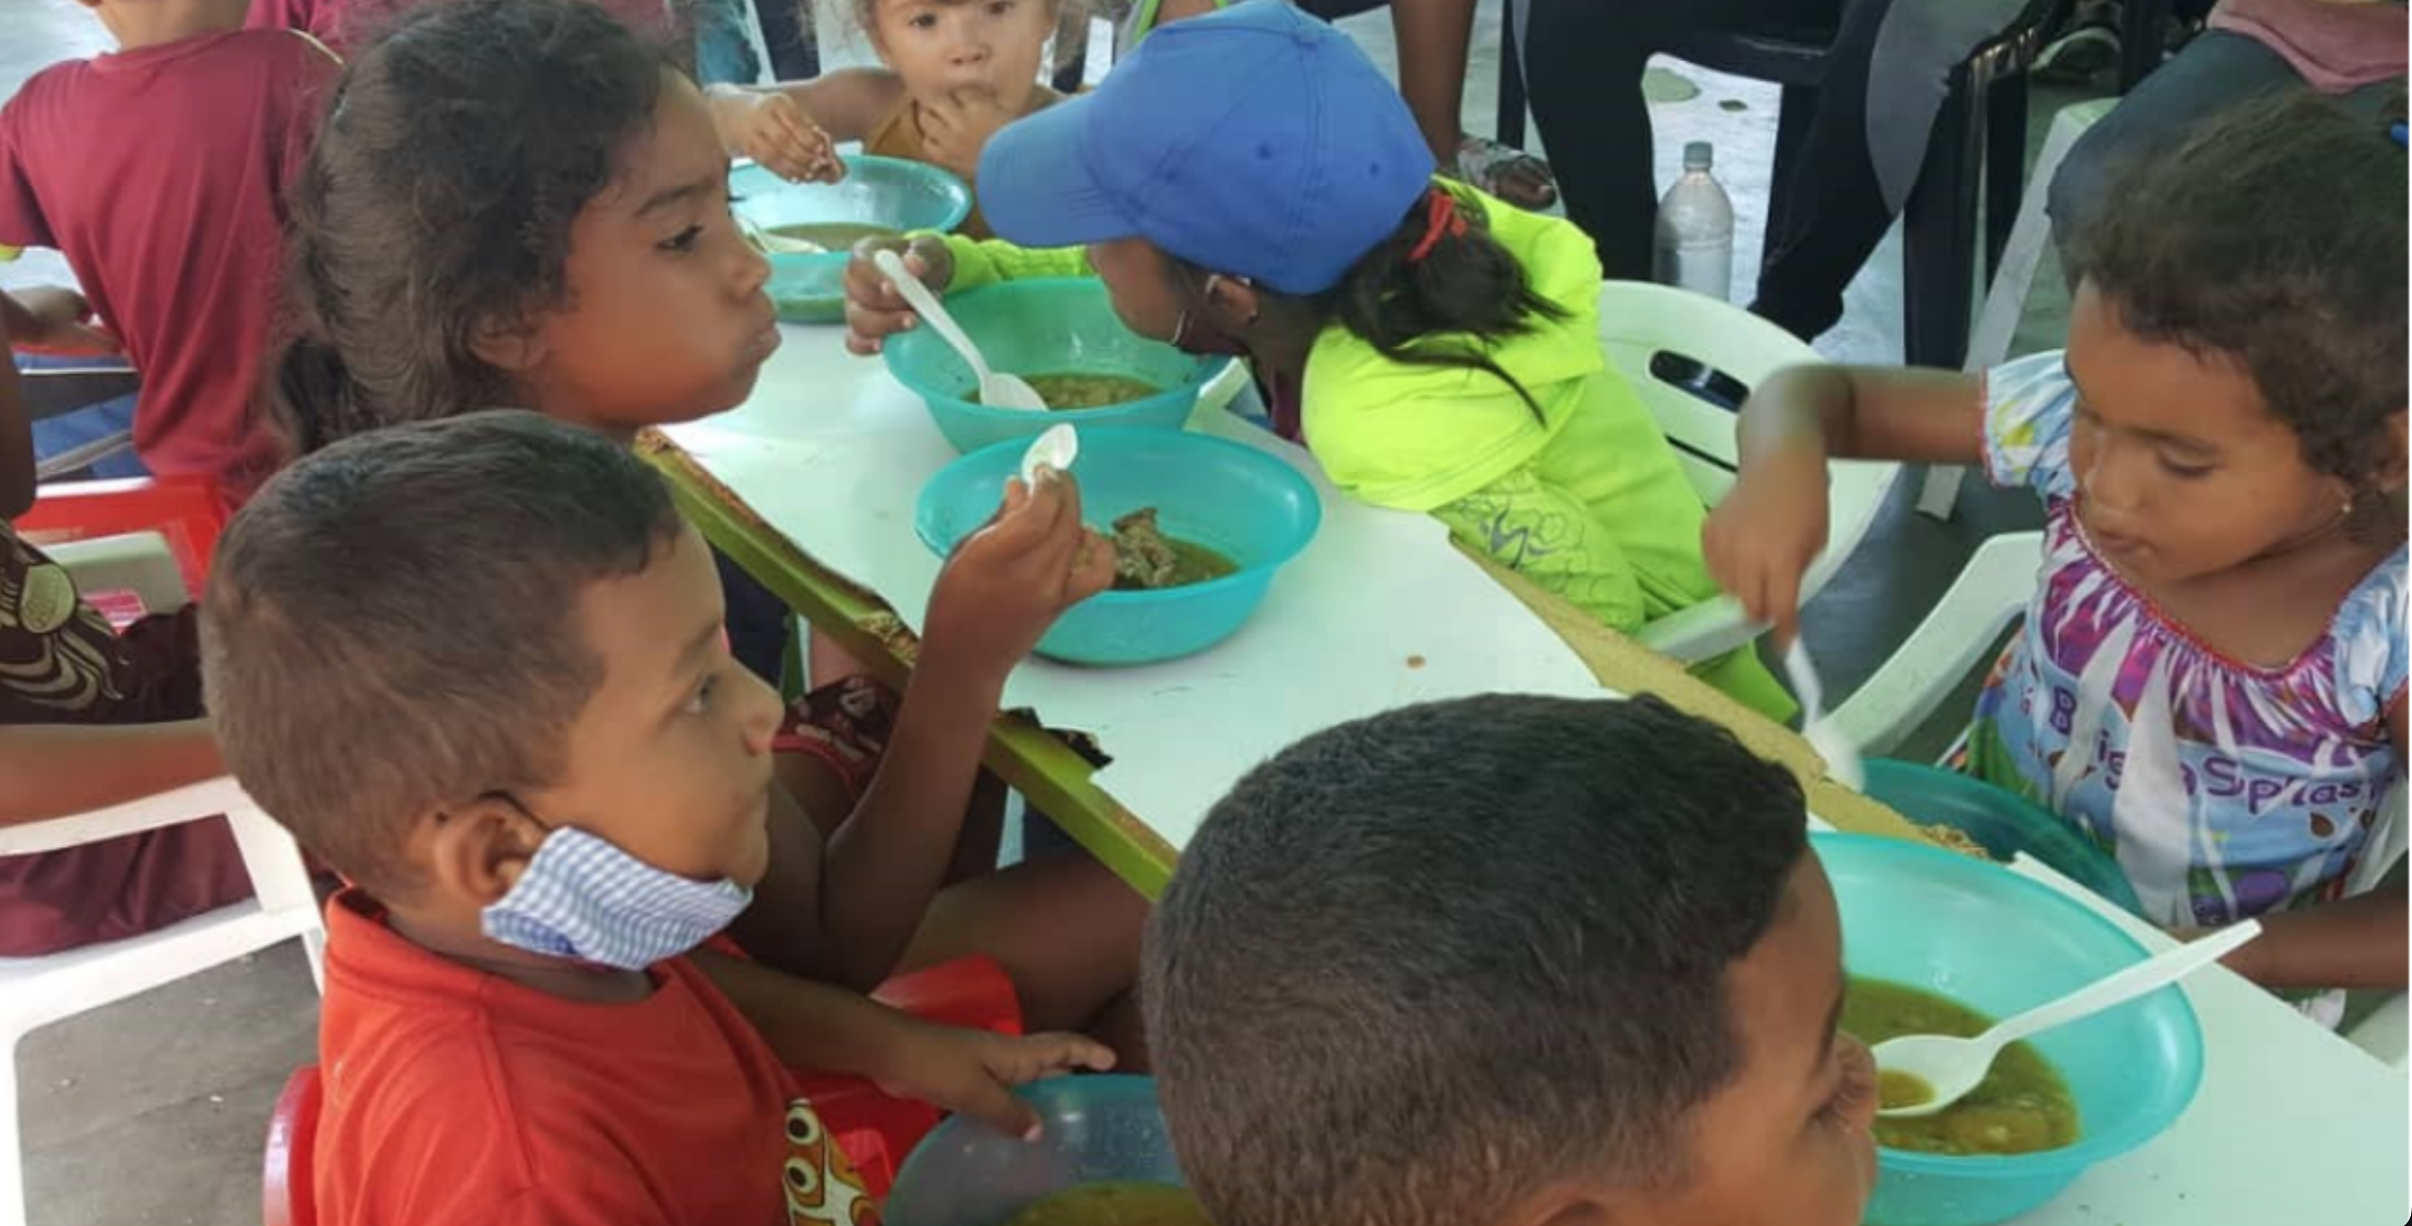 El Comedor Project - Humanitarian Aid to refugees in Venezuela